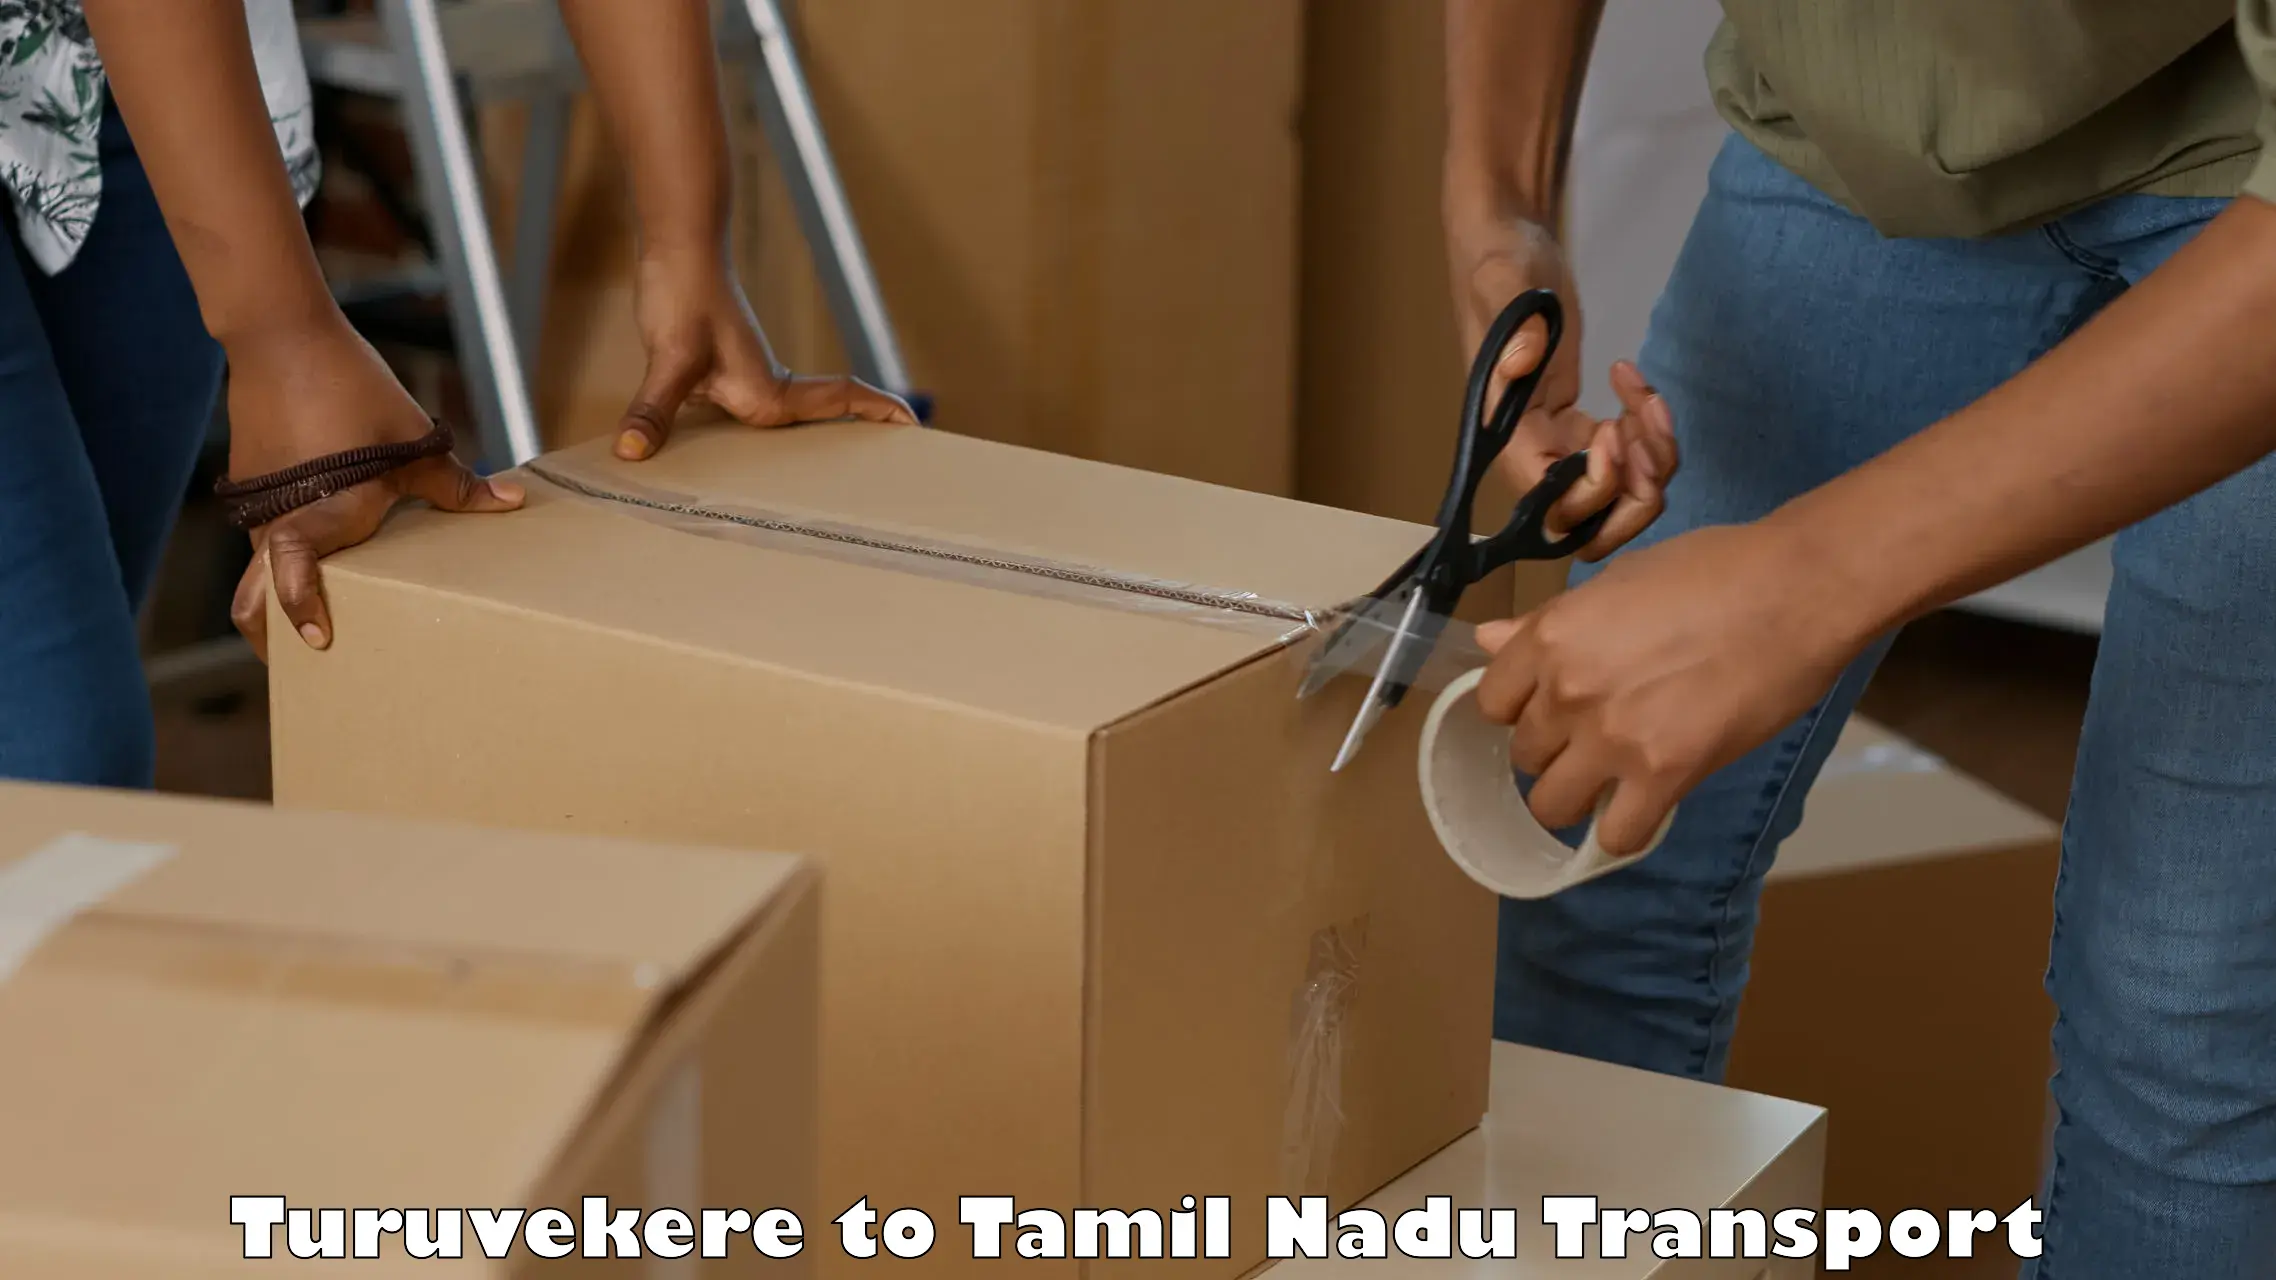 Bike transport service Turuvekere to Tamil Nadu